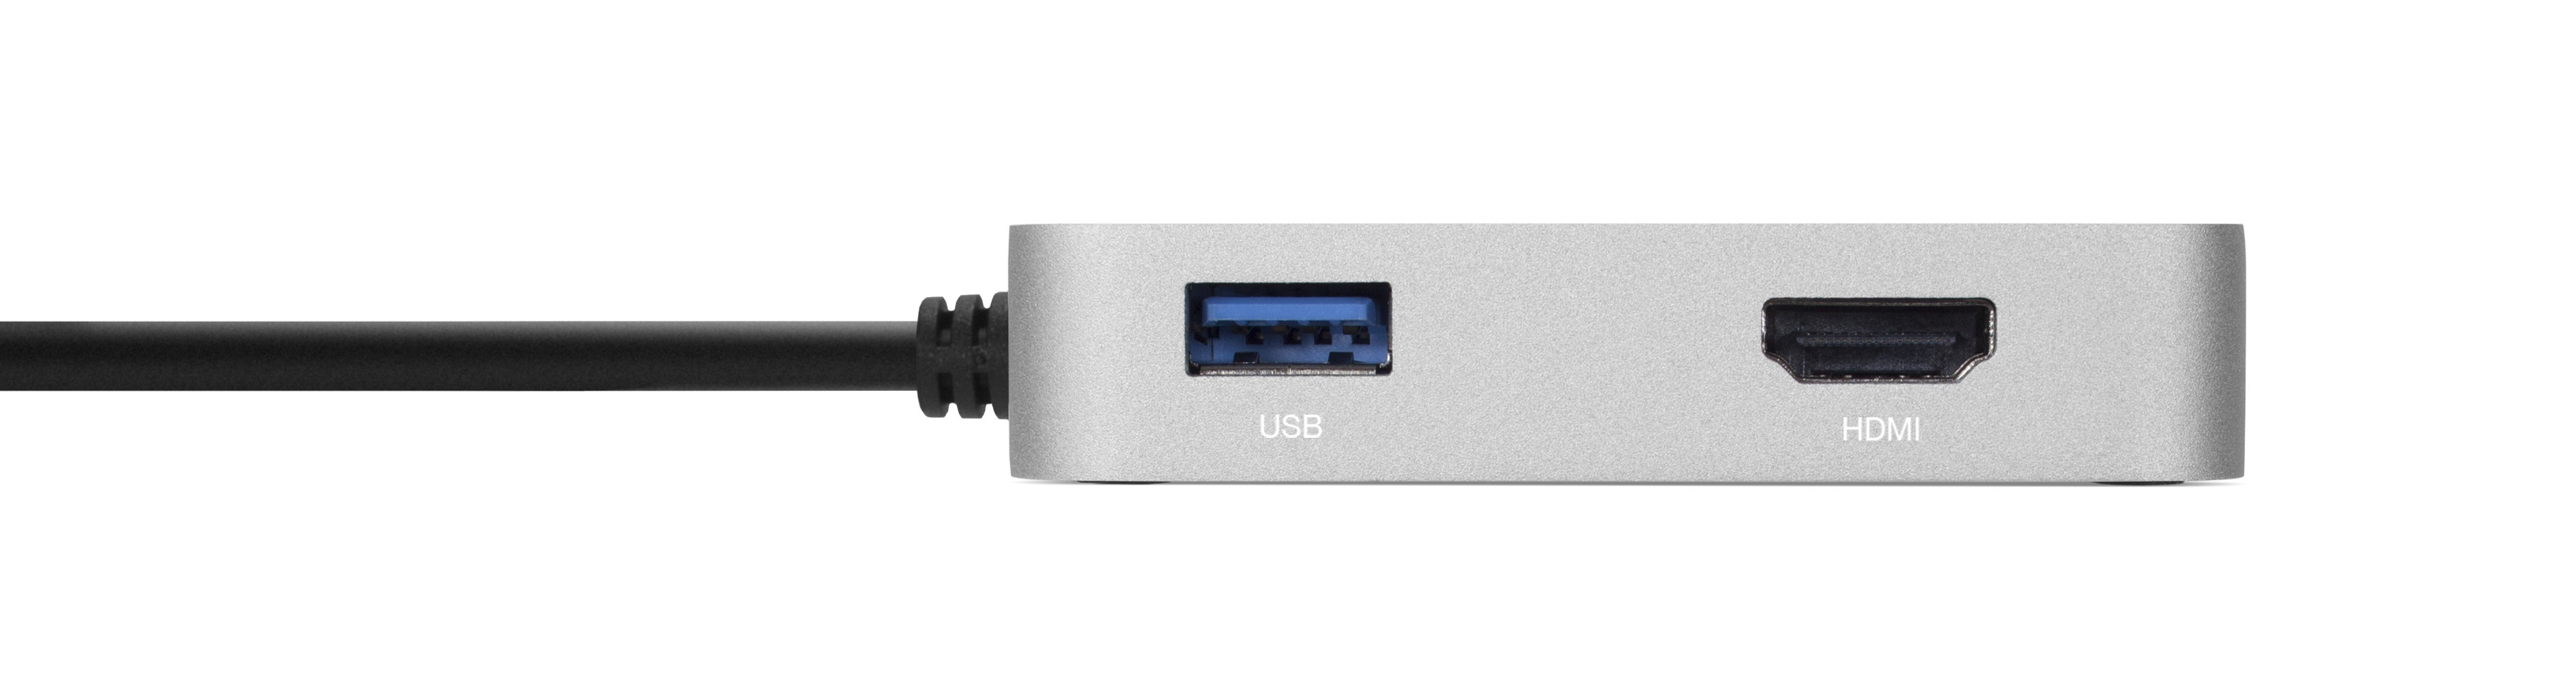 OWC USB-C Travel Dock - Side 300 dpi